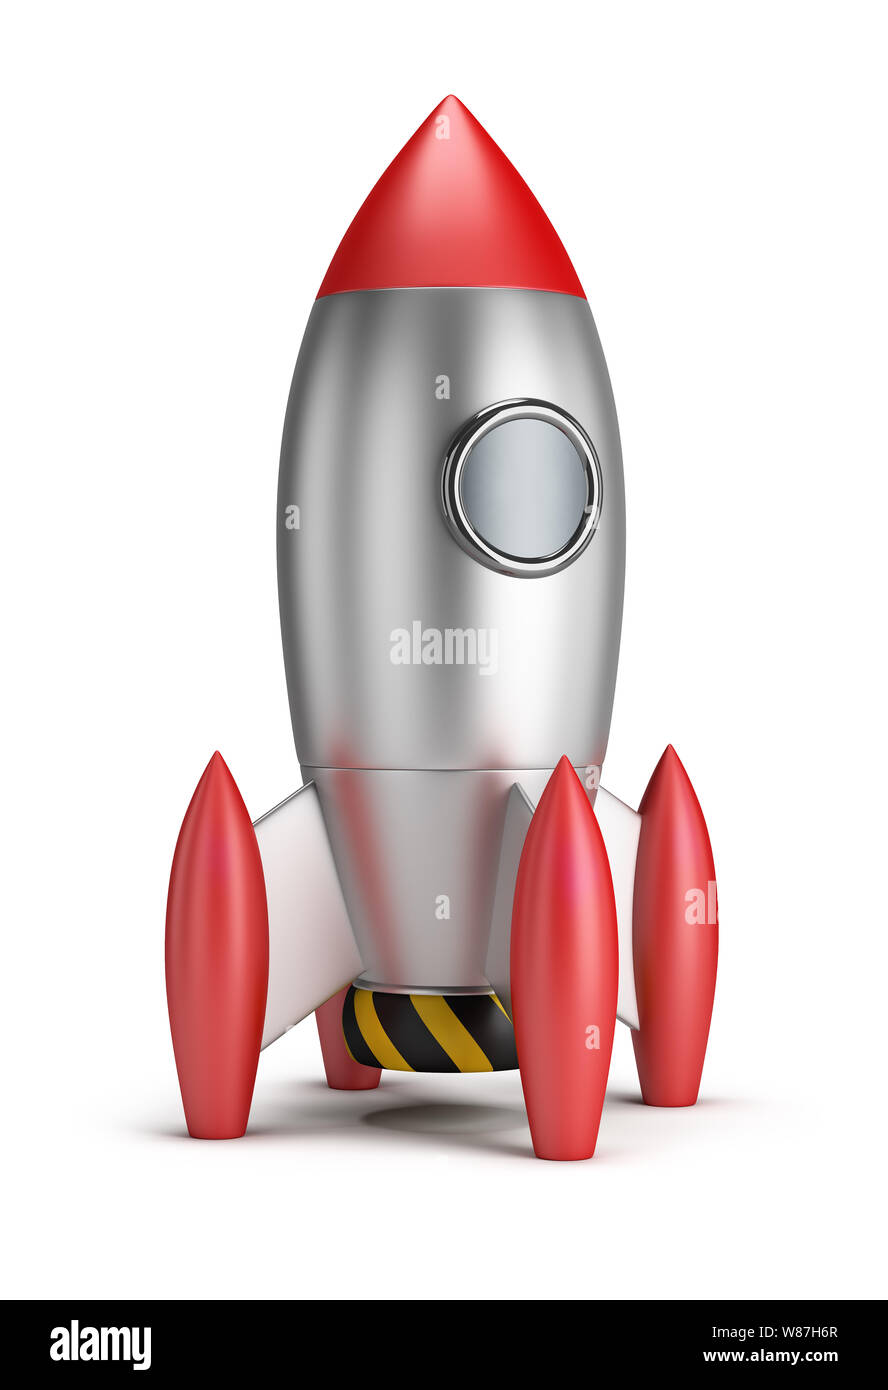 Steel rocket. 3d image. White background. Stock Photo